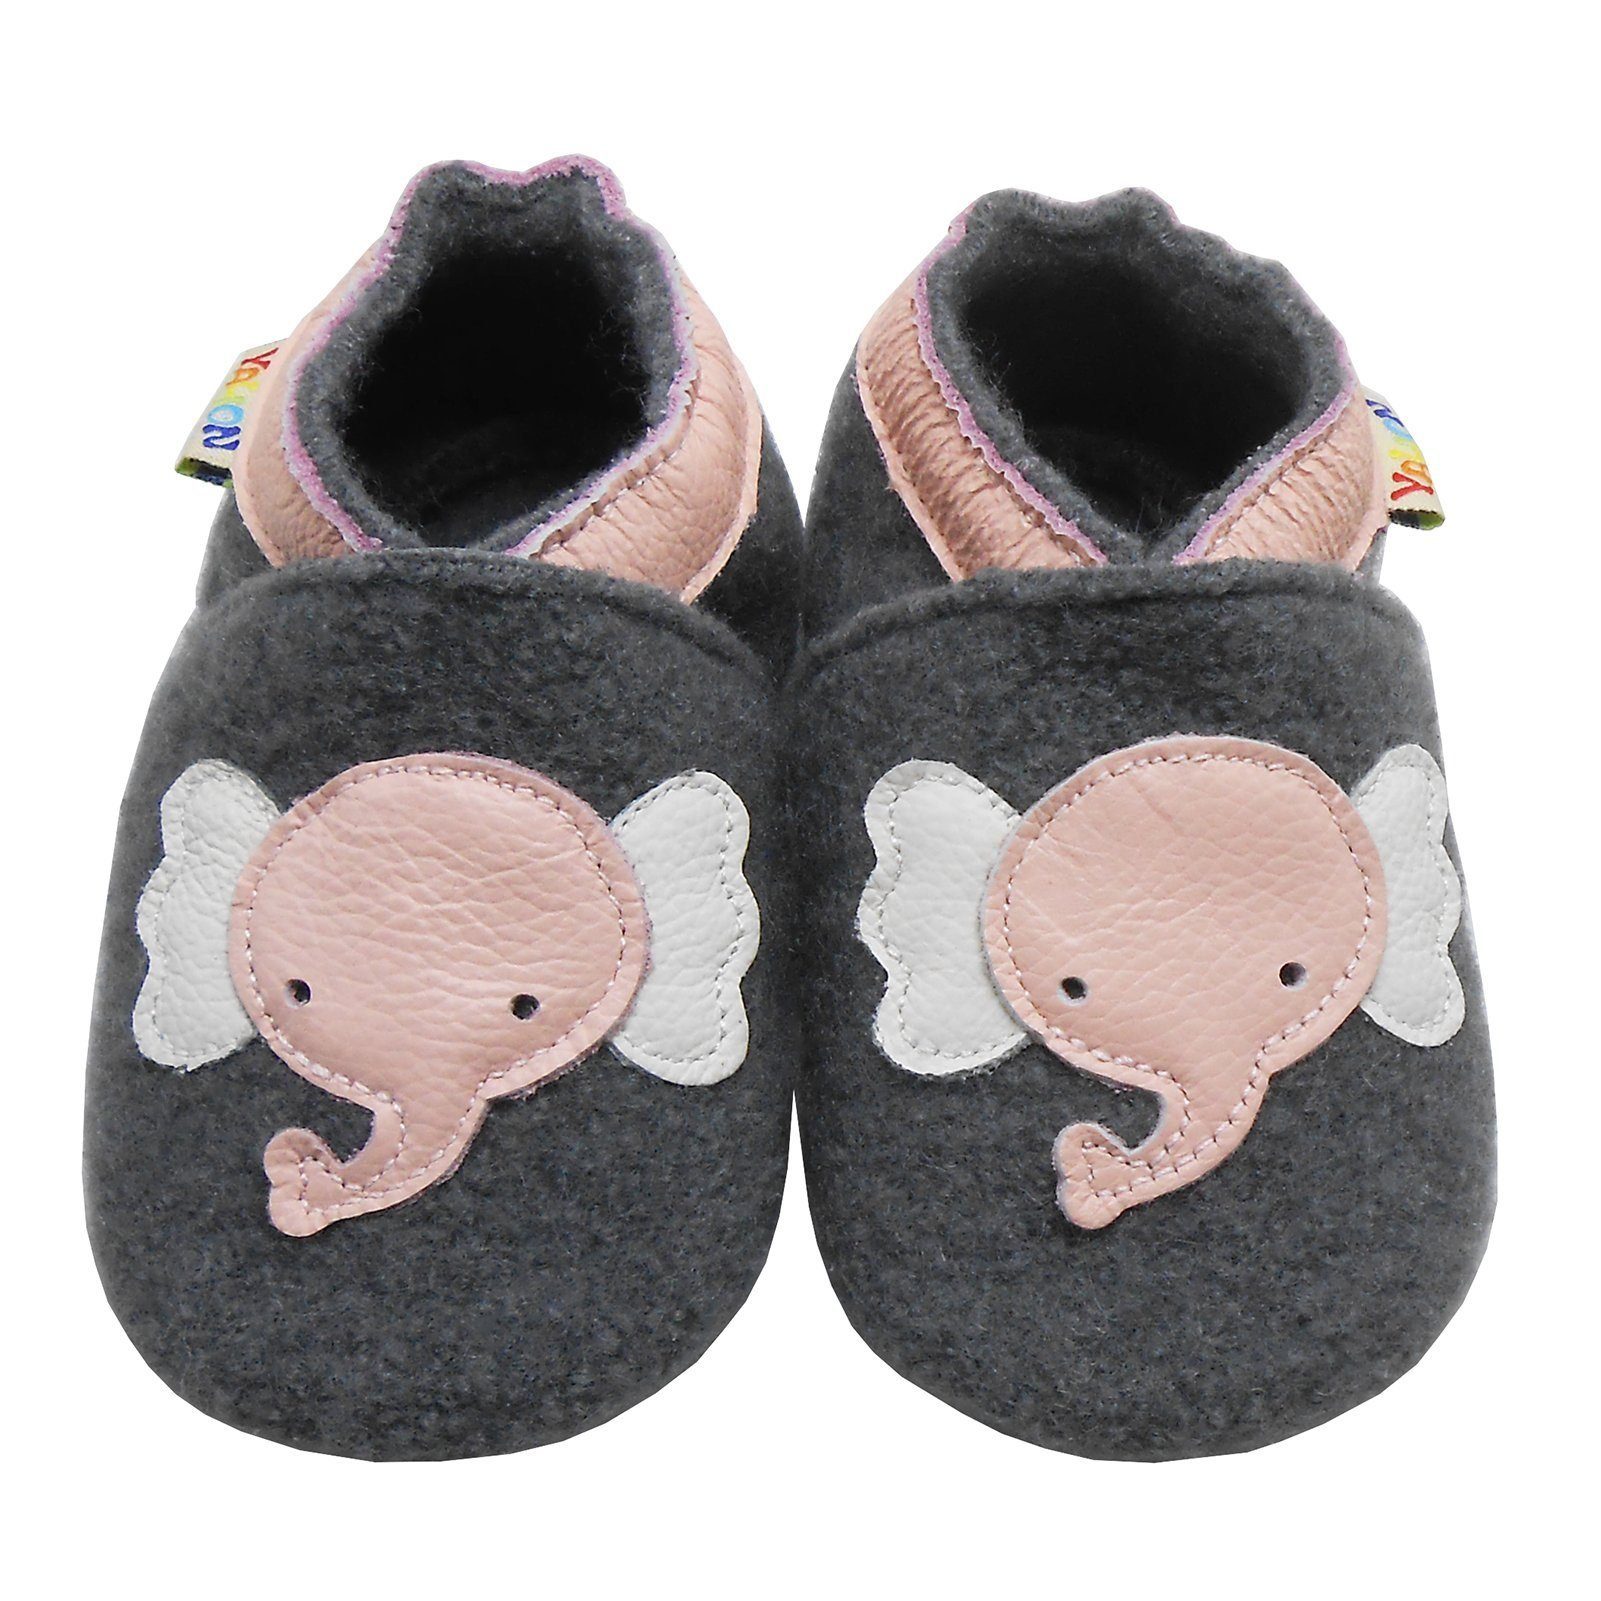 Schuhe Babyschuhe Mädchen Yalion Schuhe Kinder Anti Schweiß Krabbelschuh Filz Hausschuhe aus 100% Schafwolle, Elefant Grau Hauss